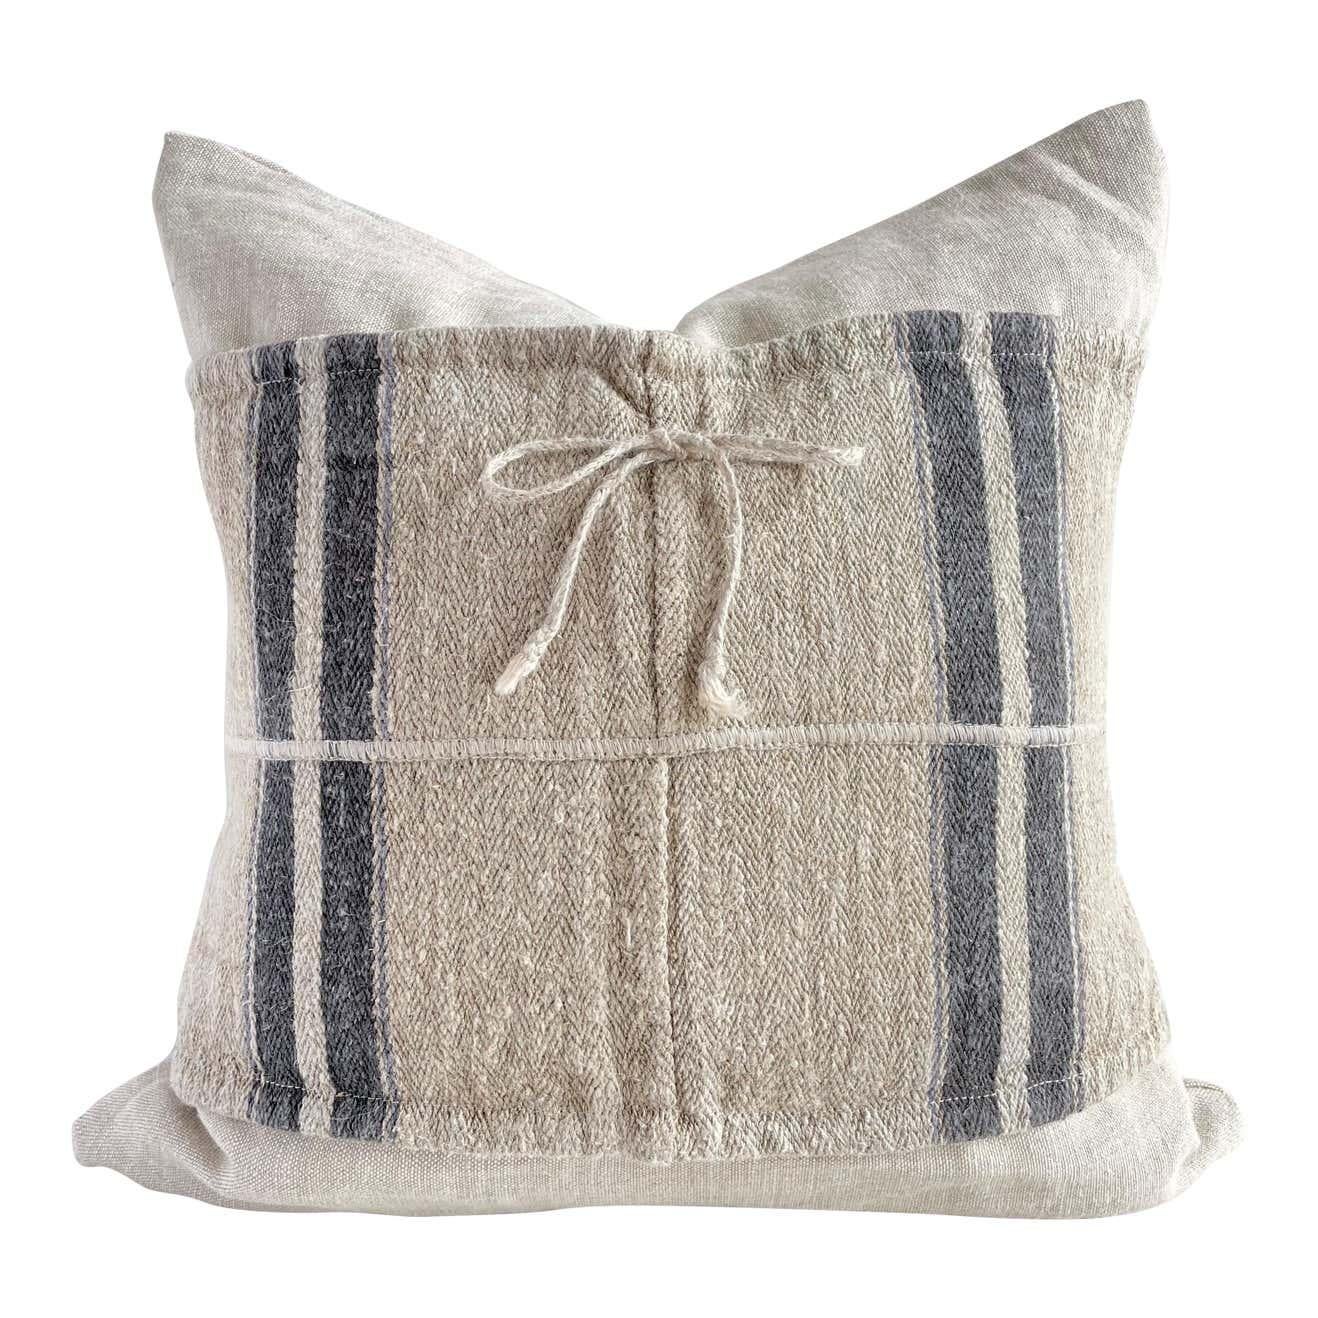 Vintage European Linen Grain Sack Pillow with Insert For Sale 5